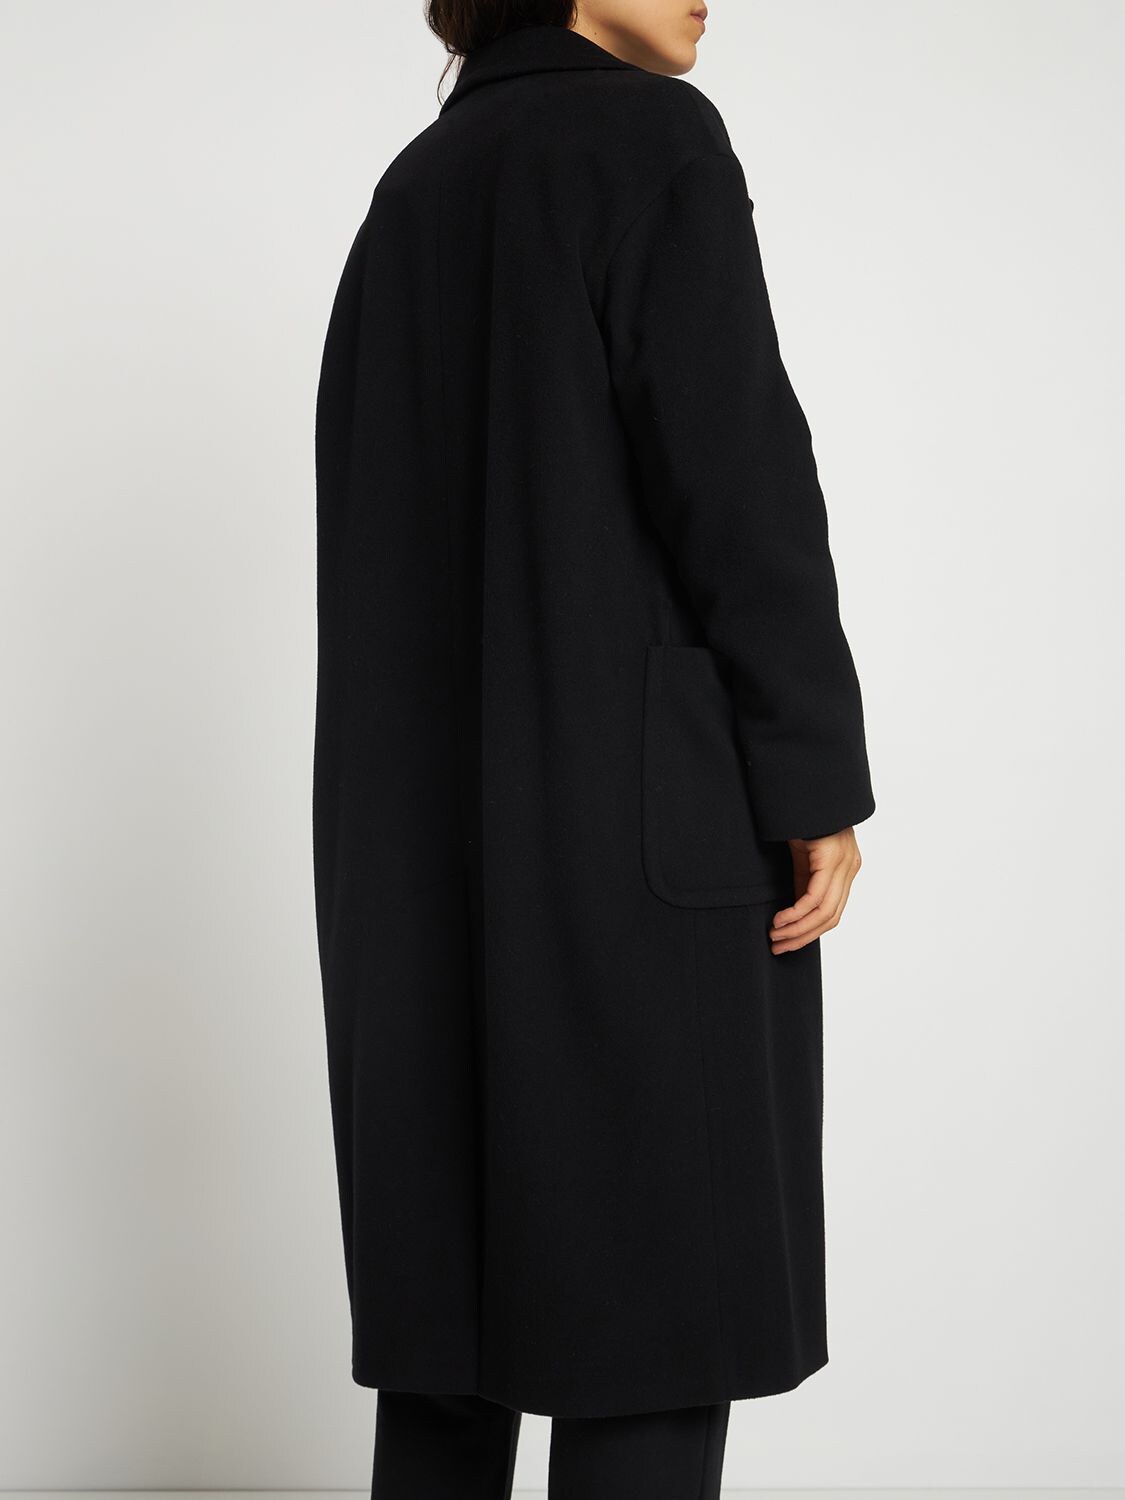 Womens Coats Tagliatore 0205 Coats Save 42% Tagliatore 0205 Black Cashmere Molly Coat 